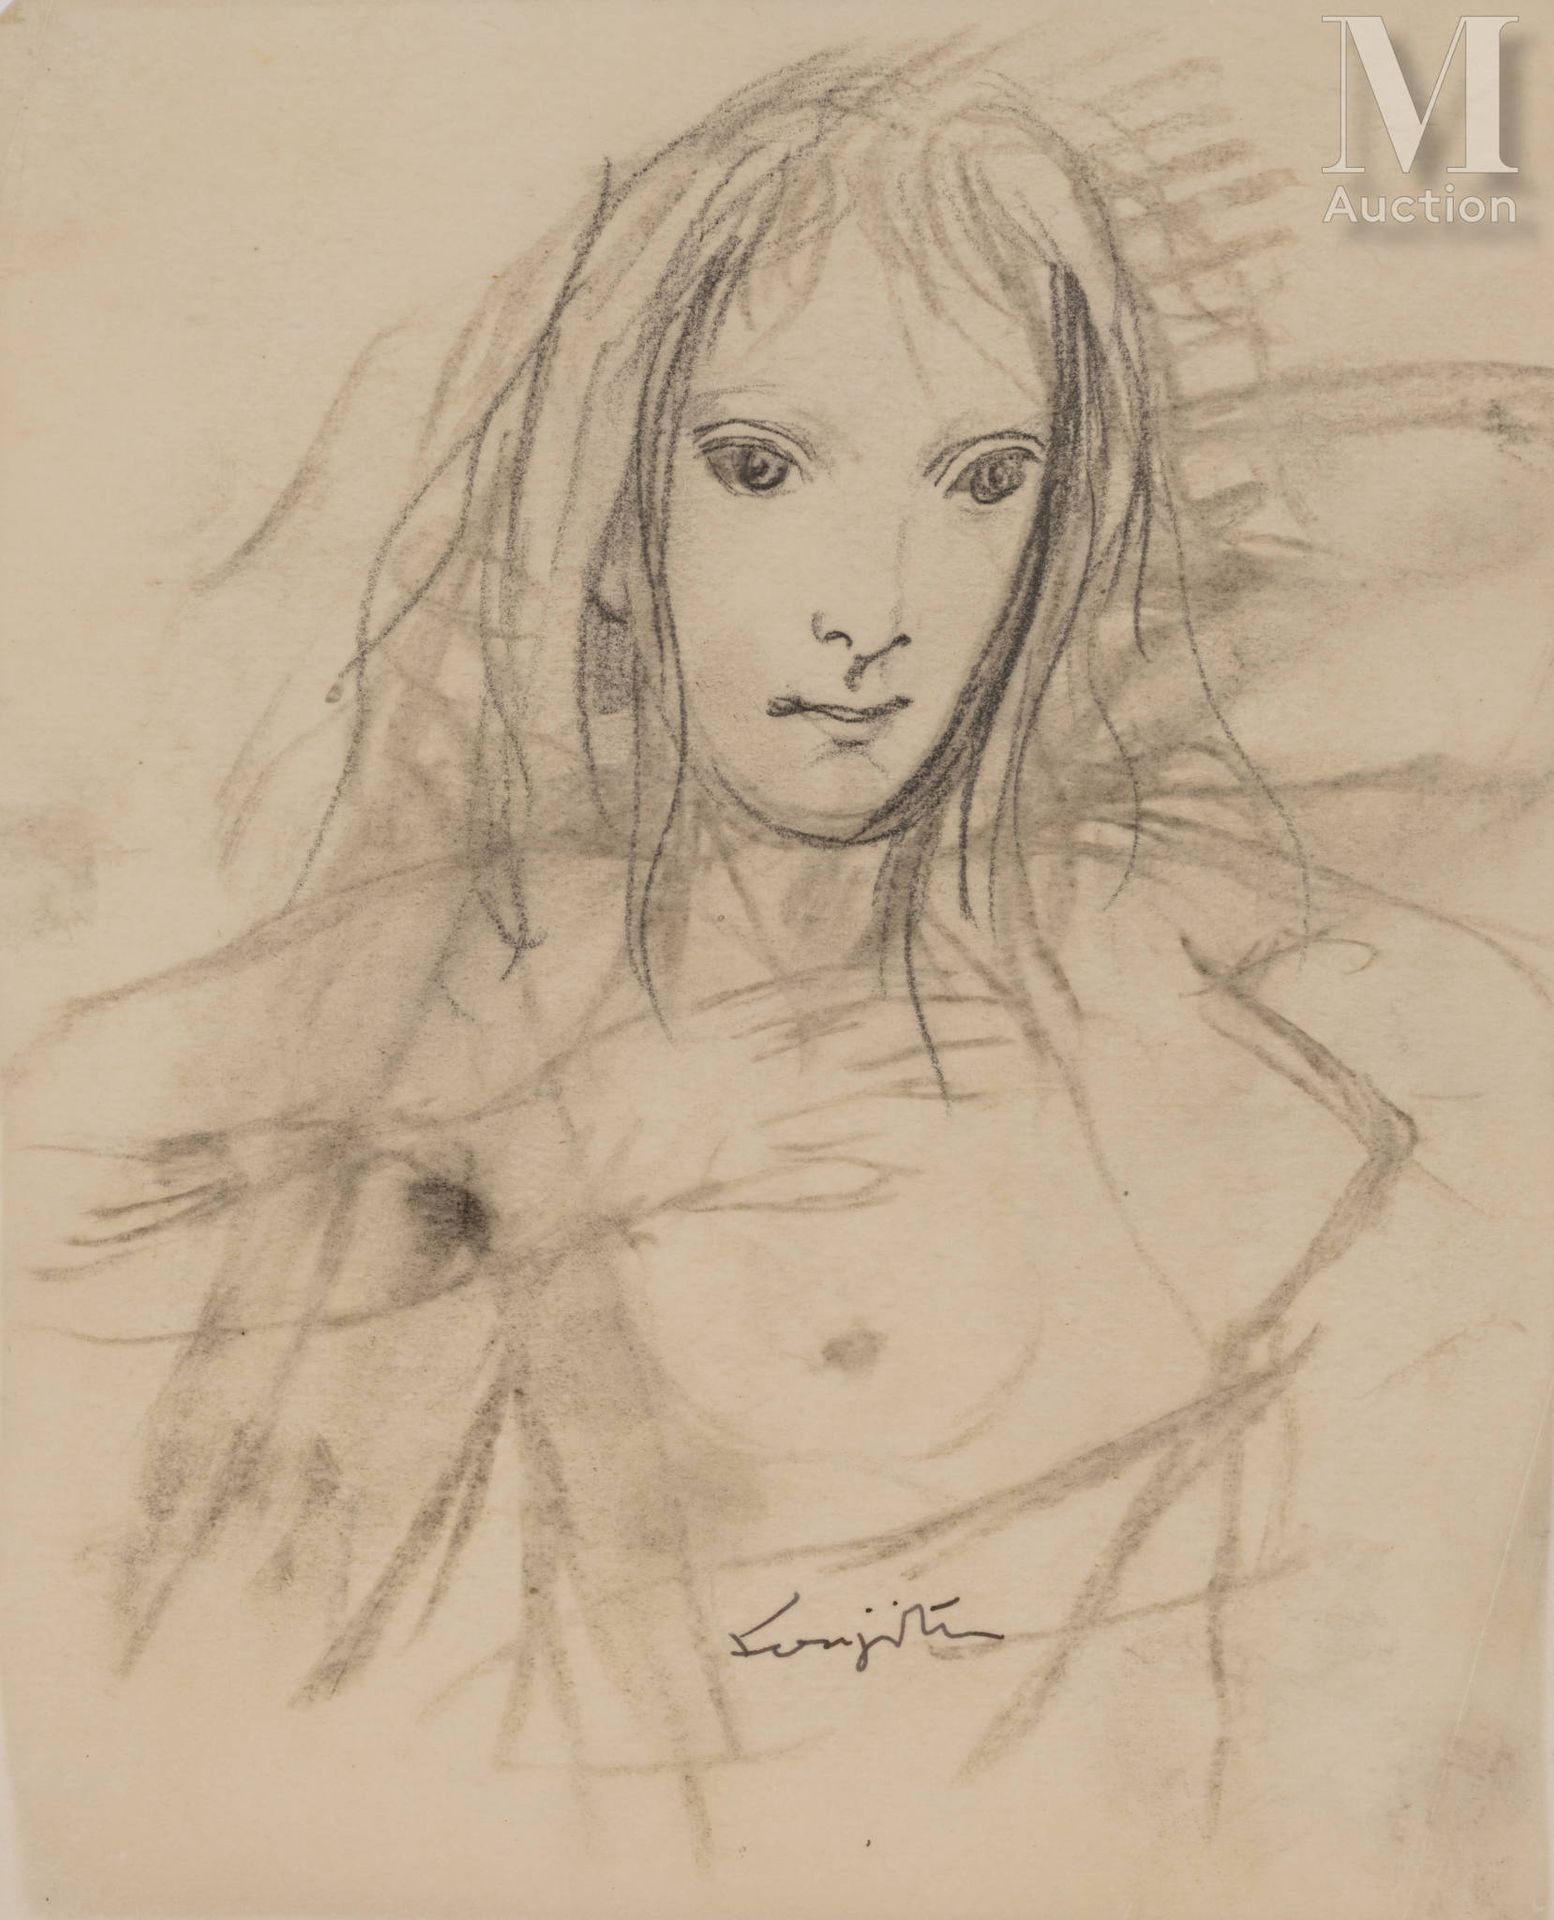 Leonard Tsuguharu FOUJITA (Tokyo 1886 - Zurich 1968) Portrait of a nude woman

G&hellip;